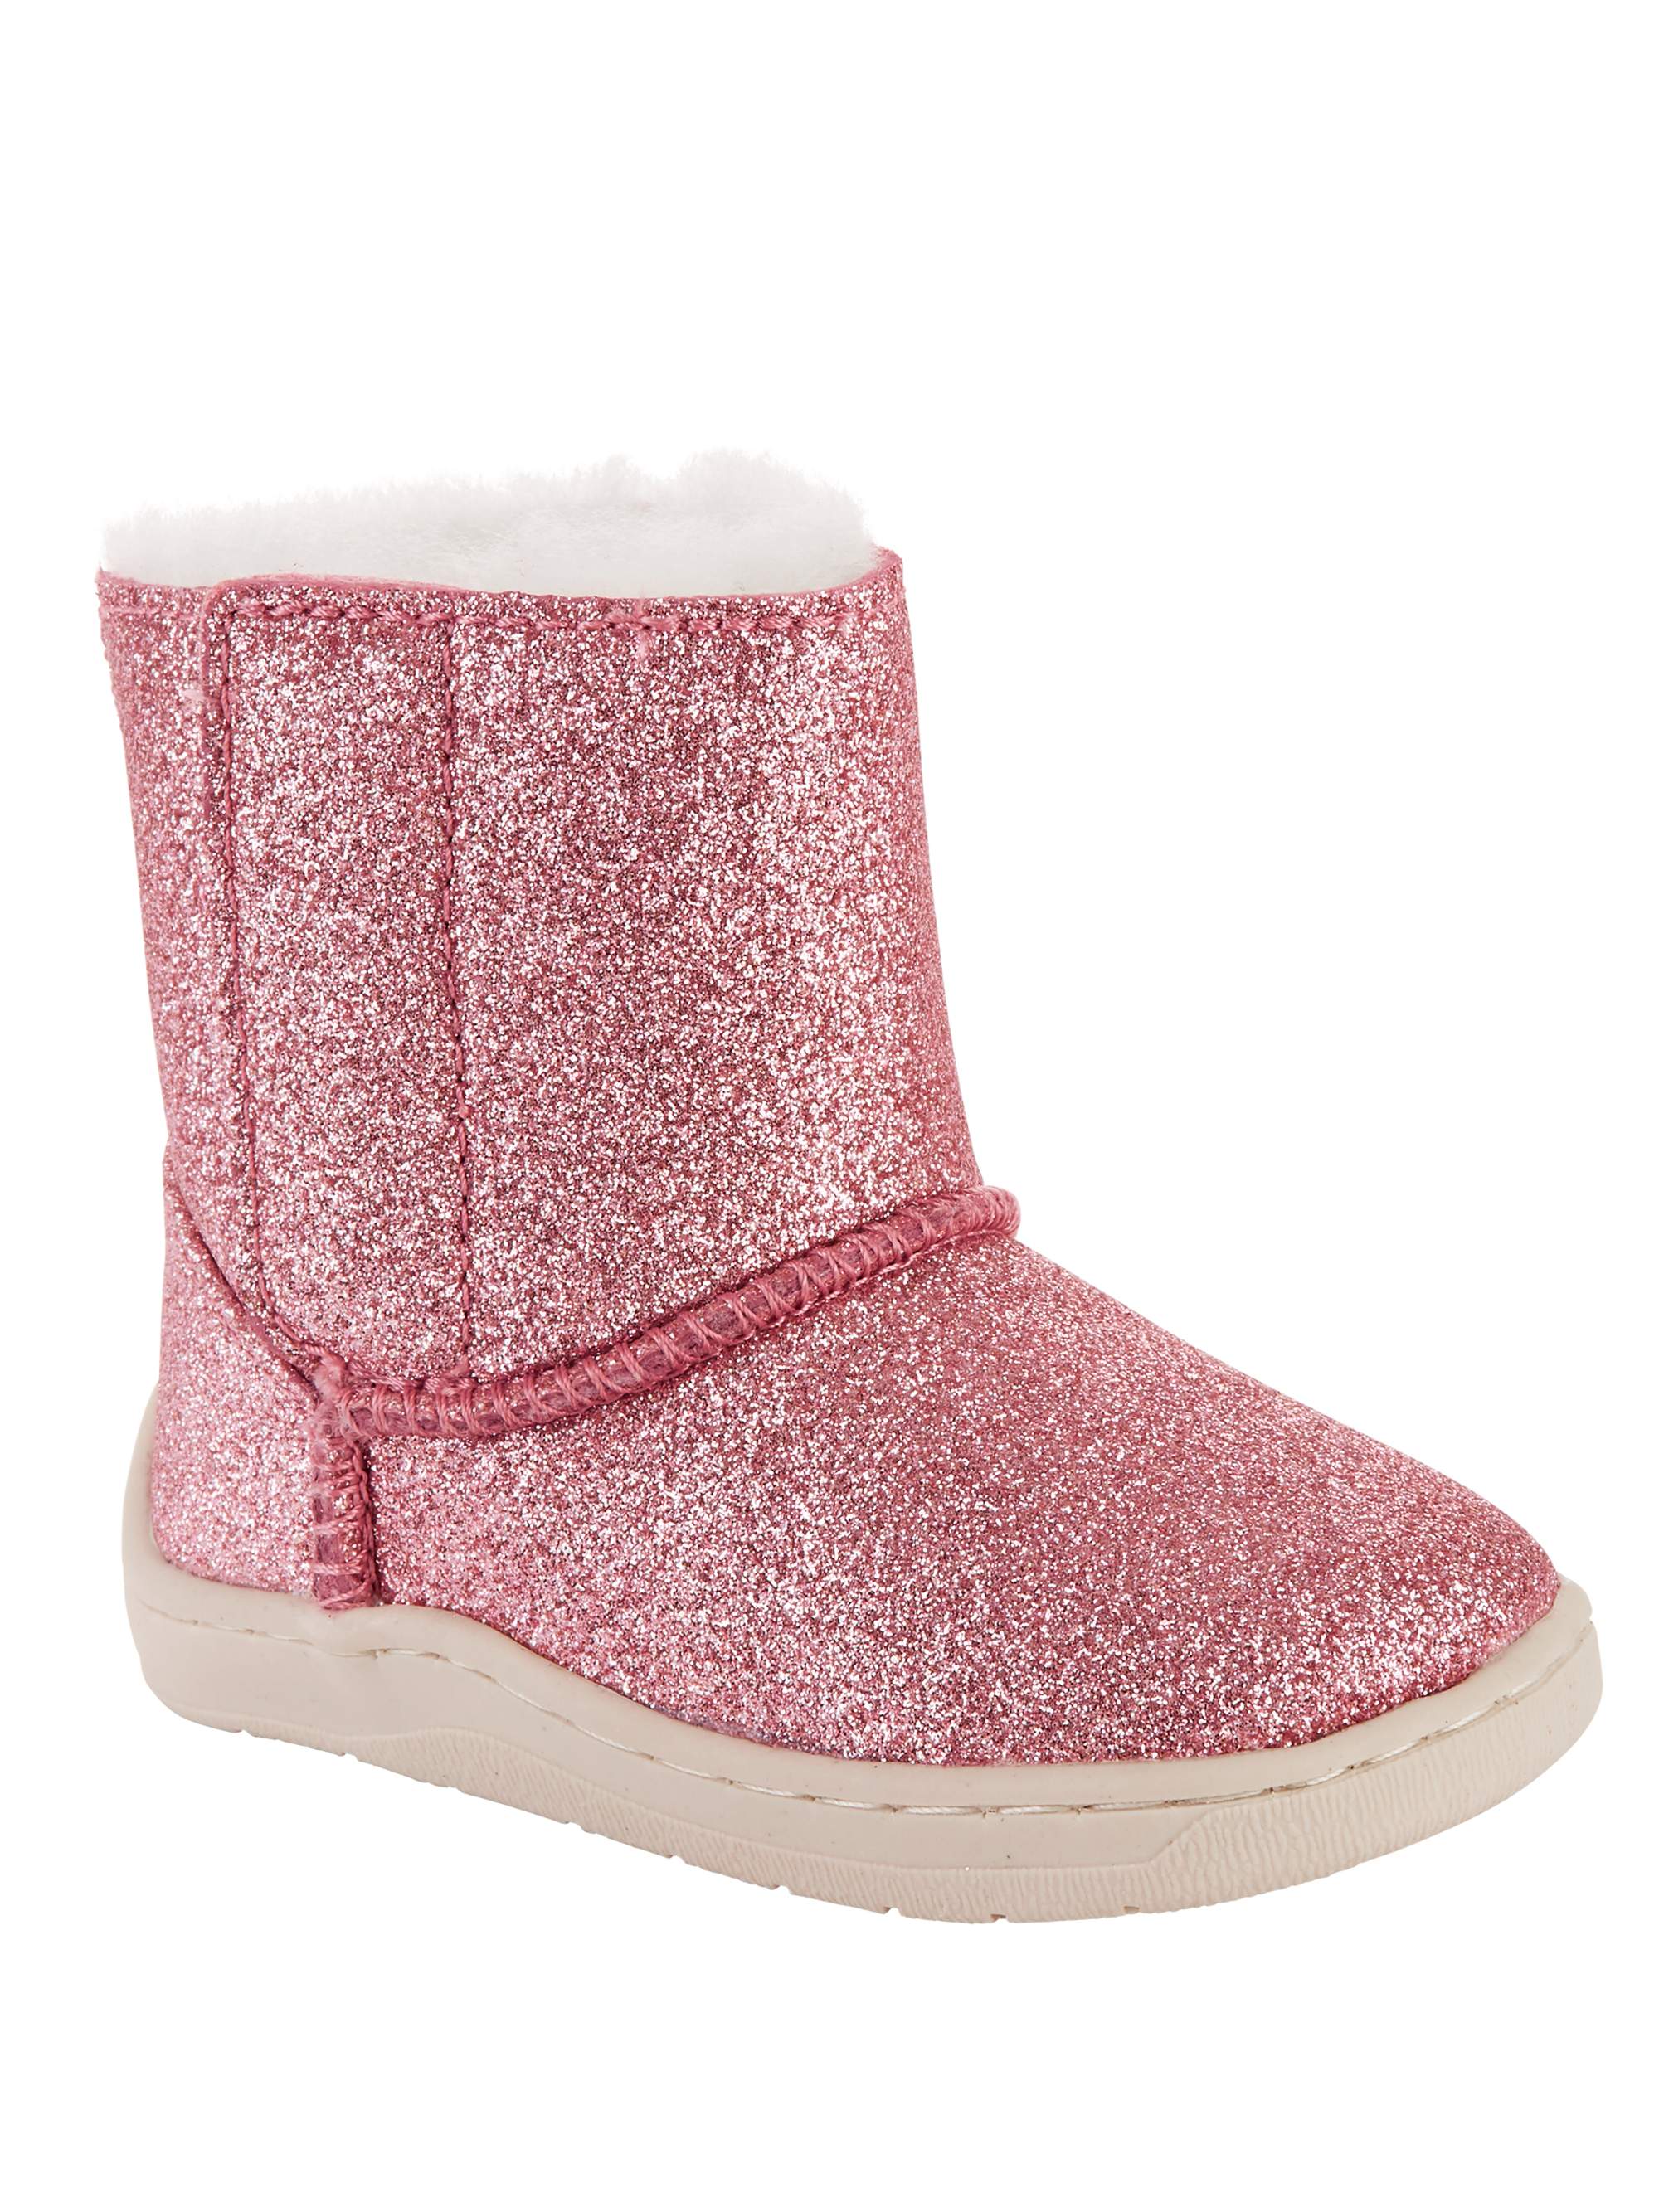 Wonder Nation Sparkly Faux Fur Boots (Infant Girls) - image 1 of 6